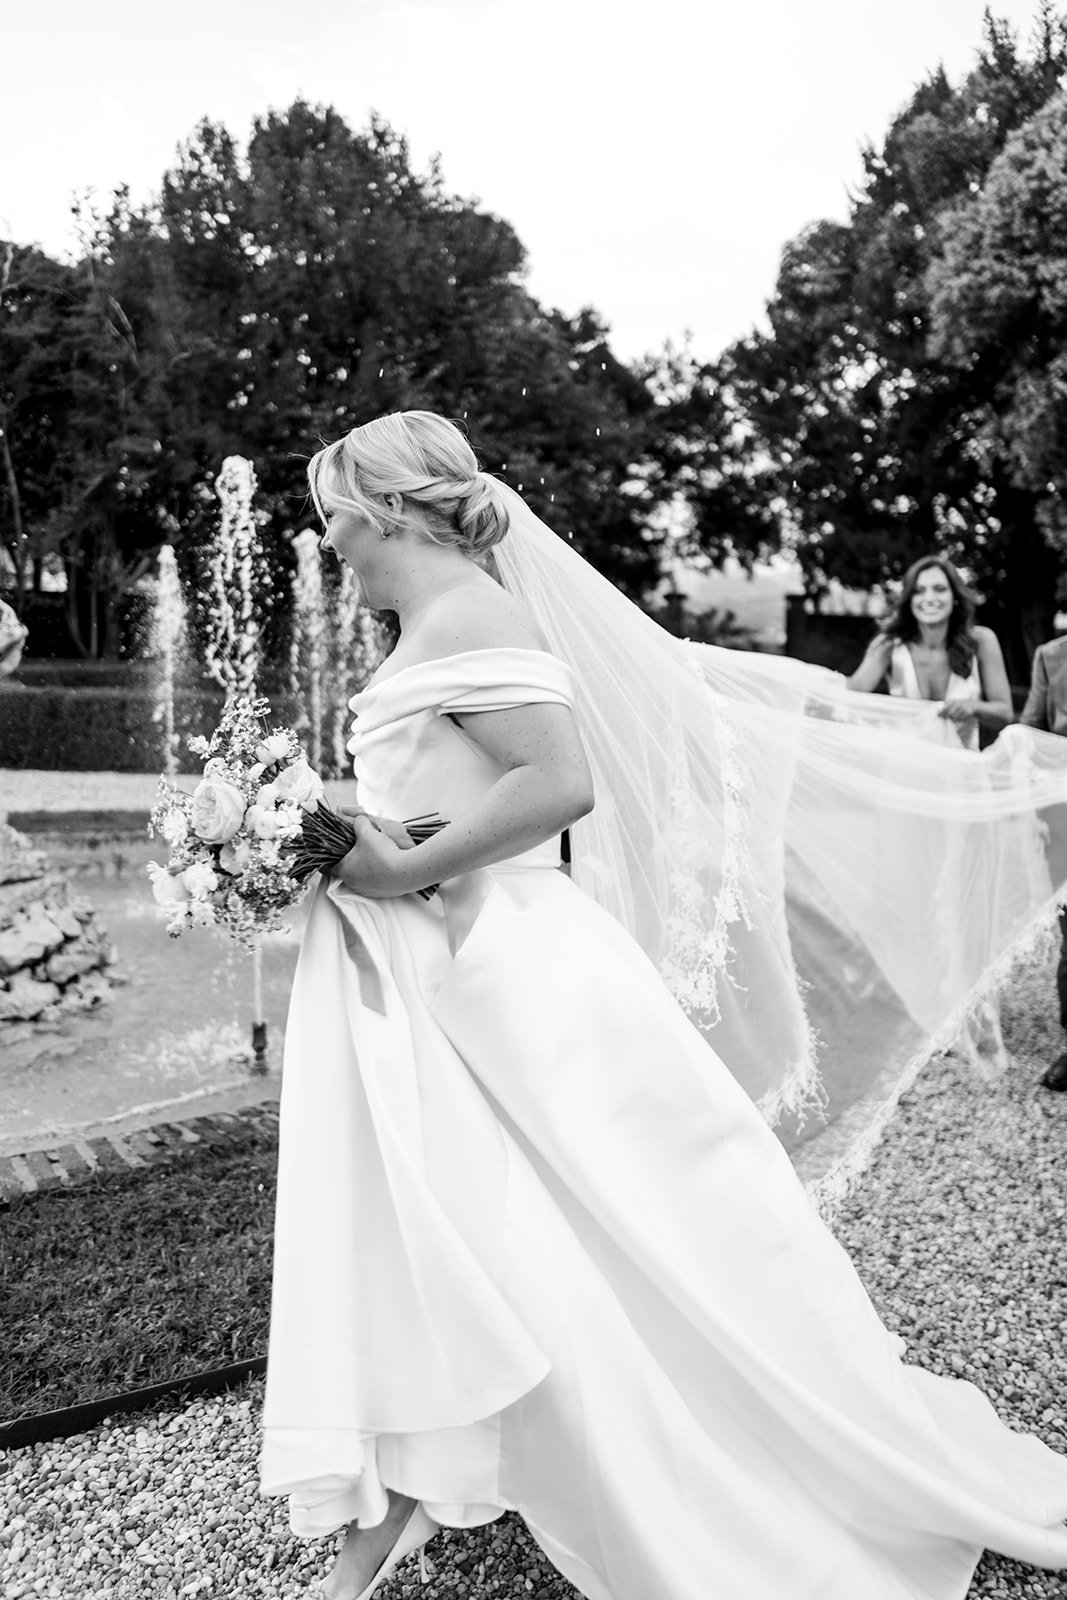 Beautiful bride Luisa wore the Okotan Corset, Ellie skirt and Palm veil | Wedding dress by Halfpenny London